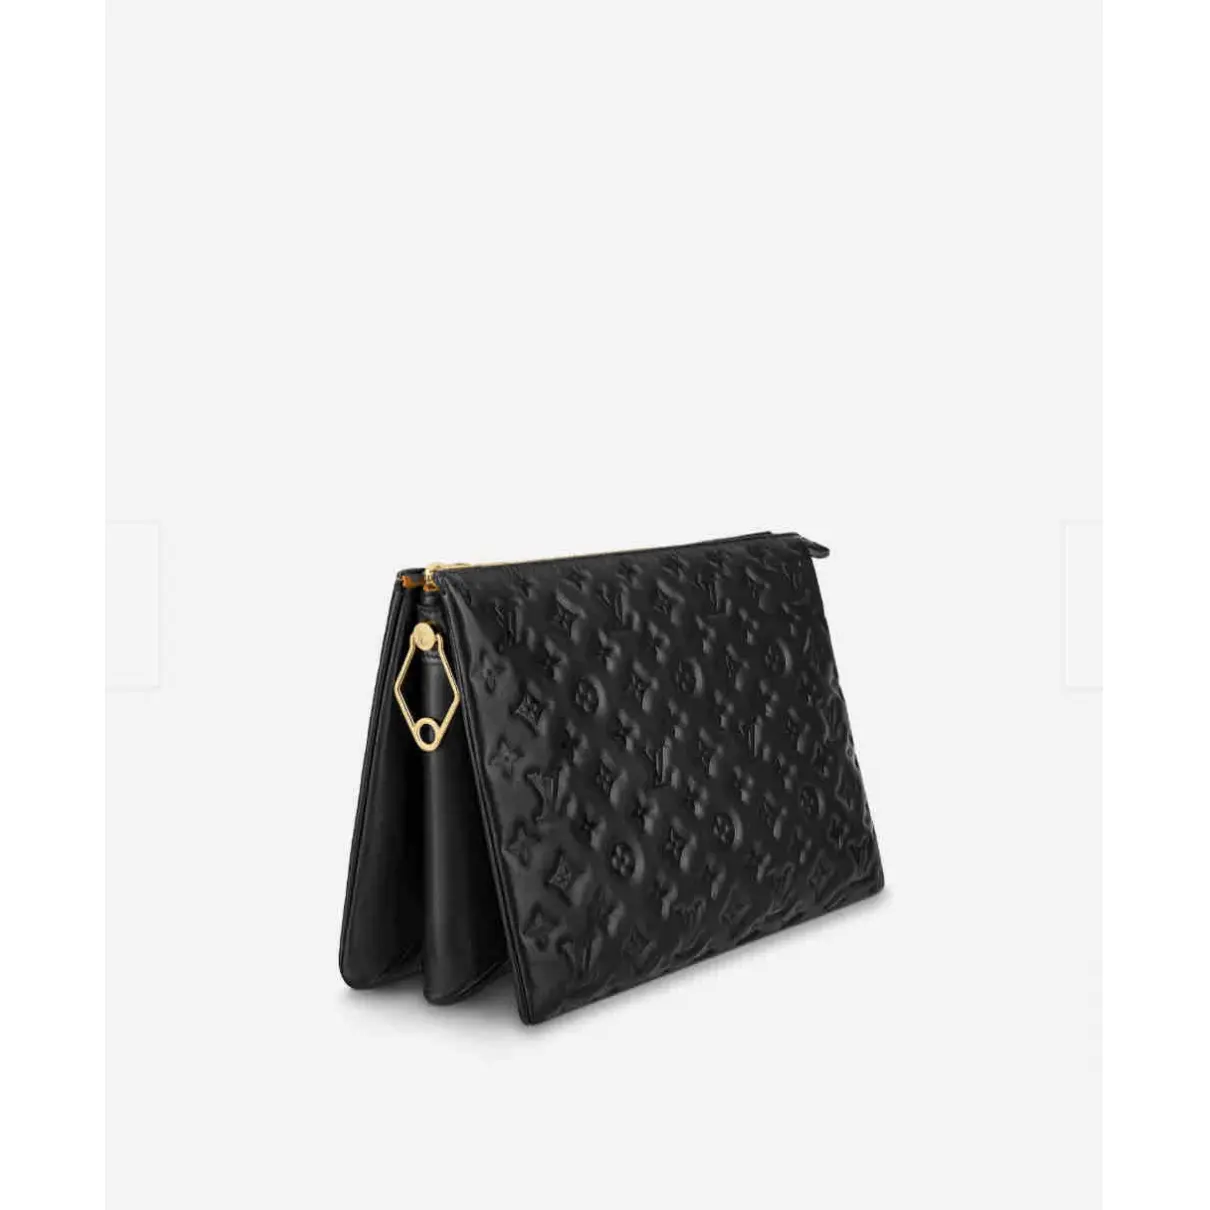 Buy Louis Vuitton Coussin leather crossbody bag online